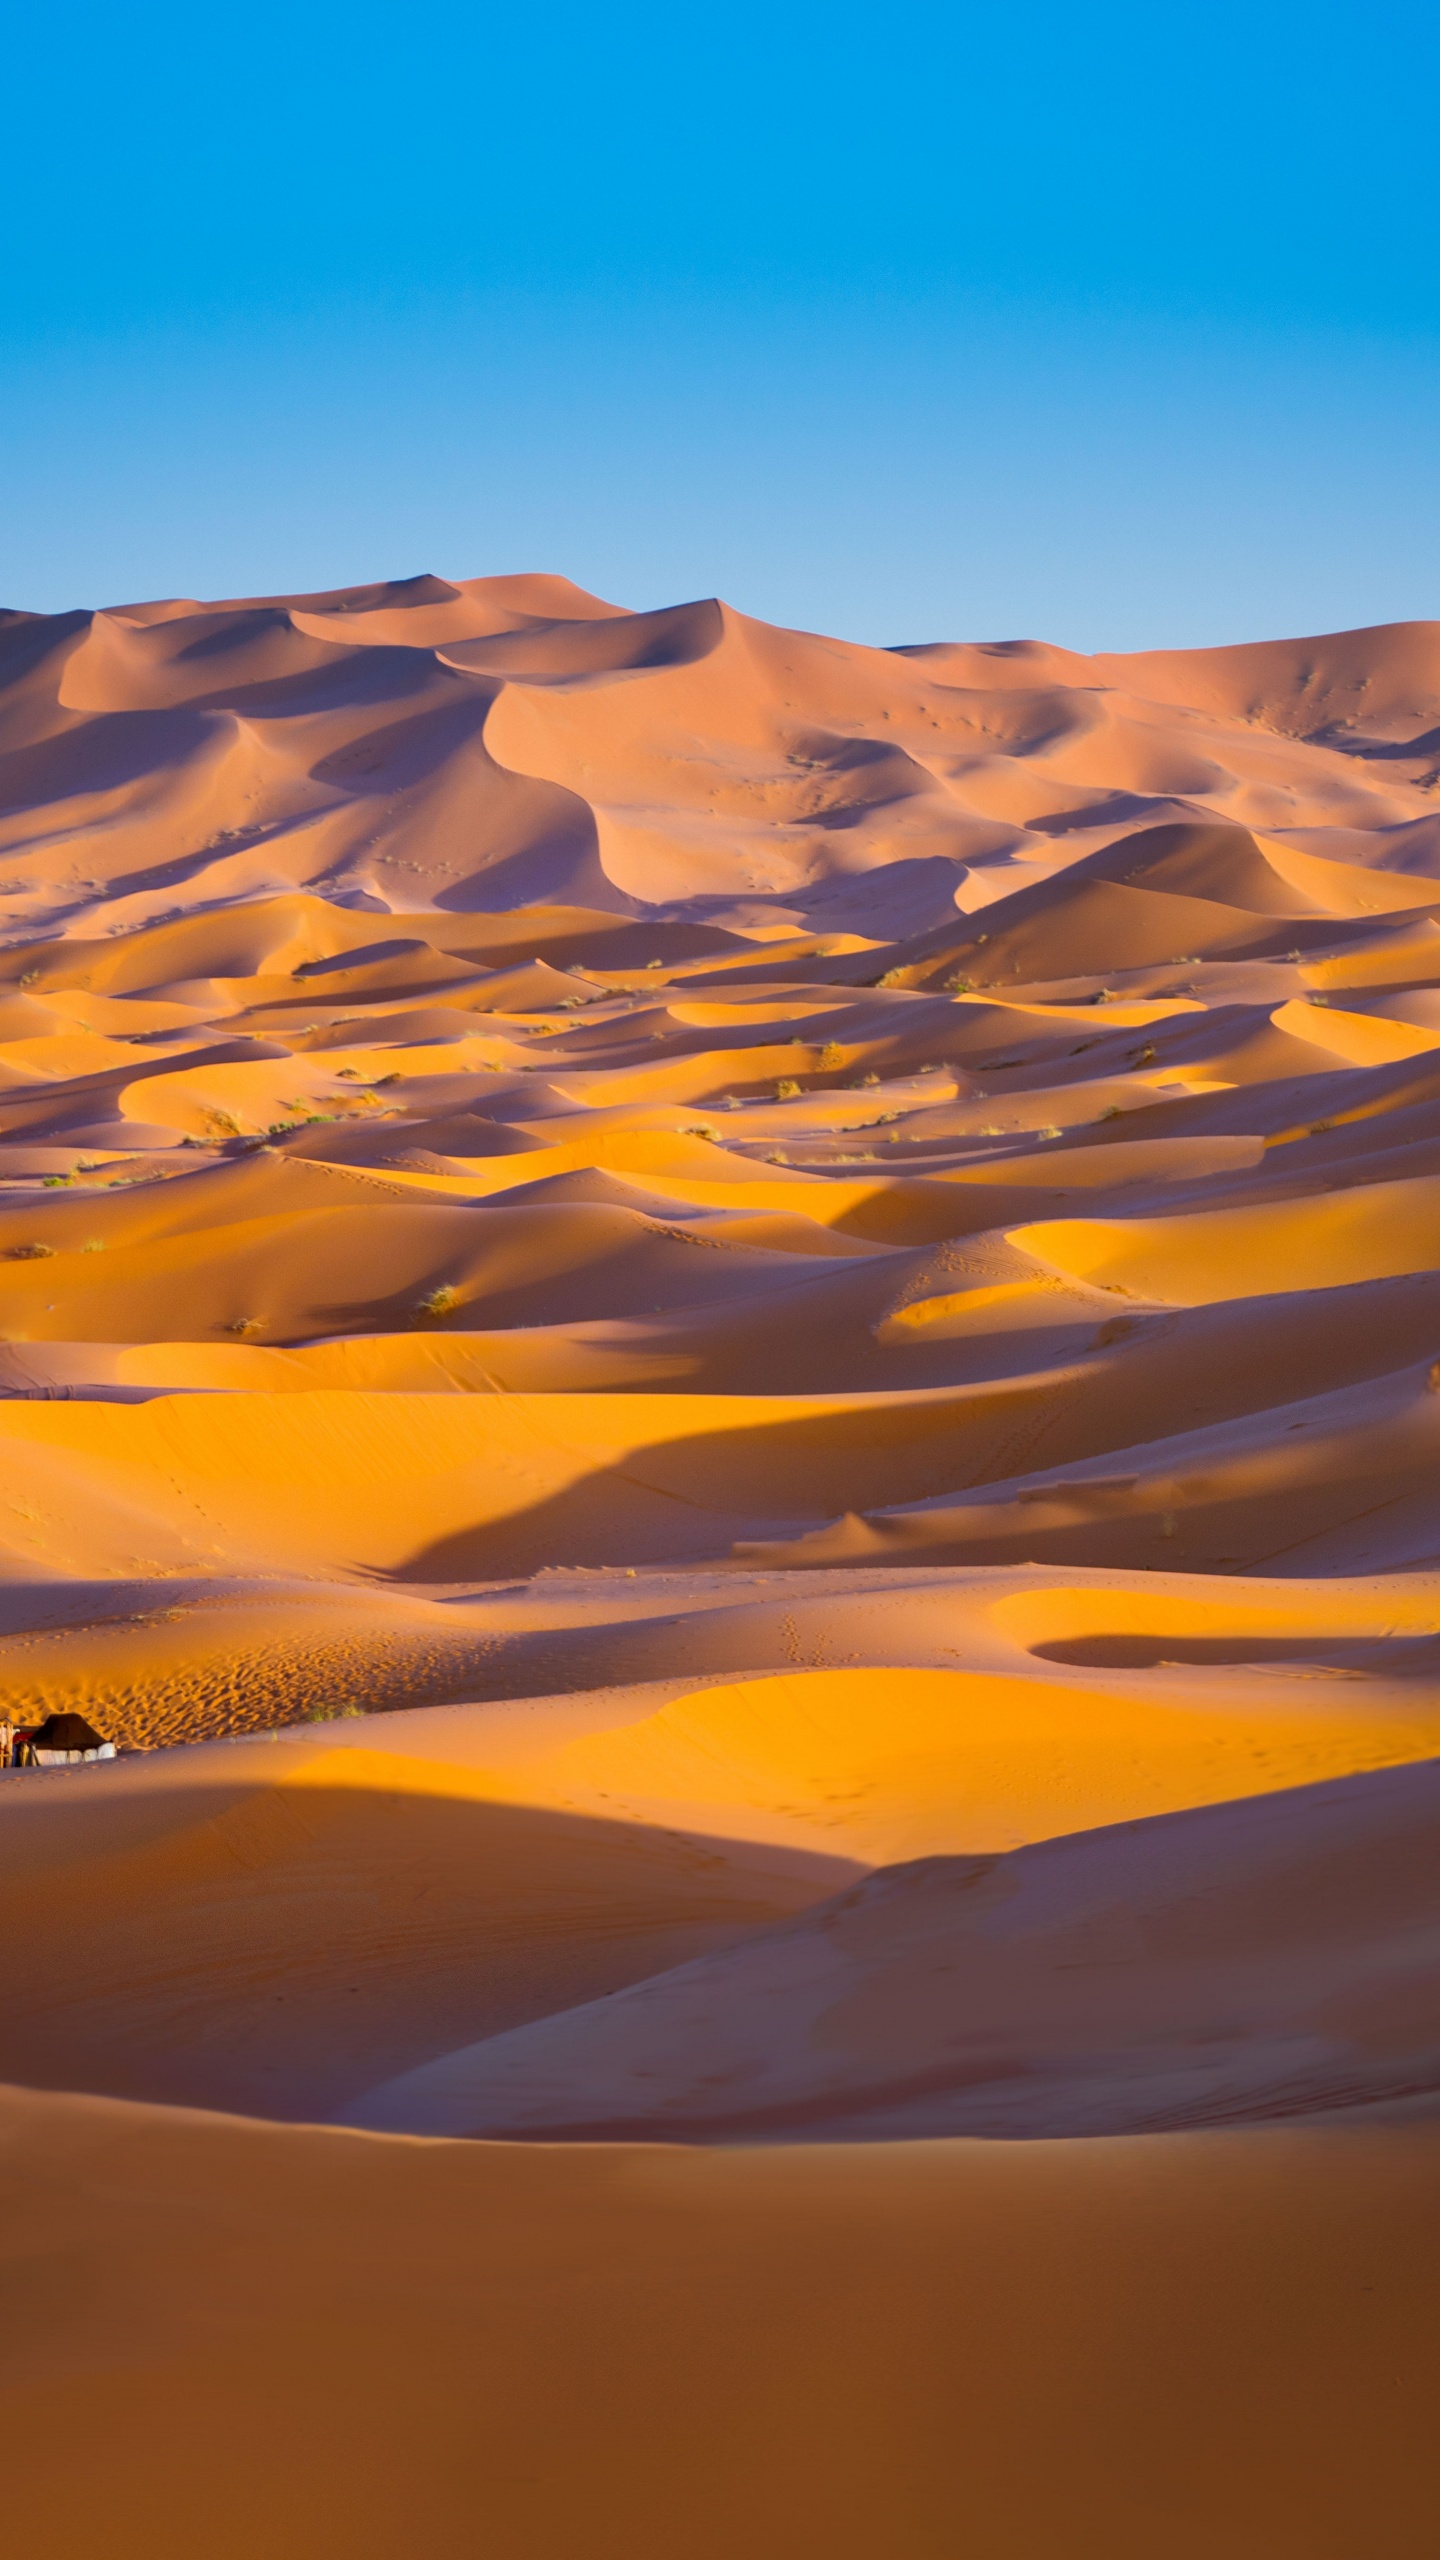 Night In The Desert iPhone Wallpaper  iDrop News